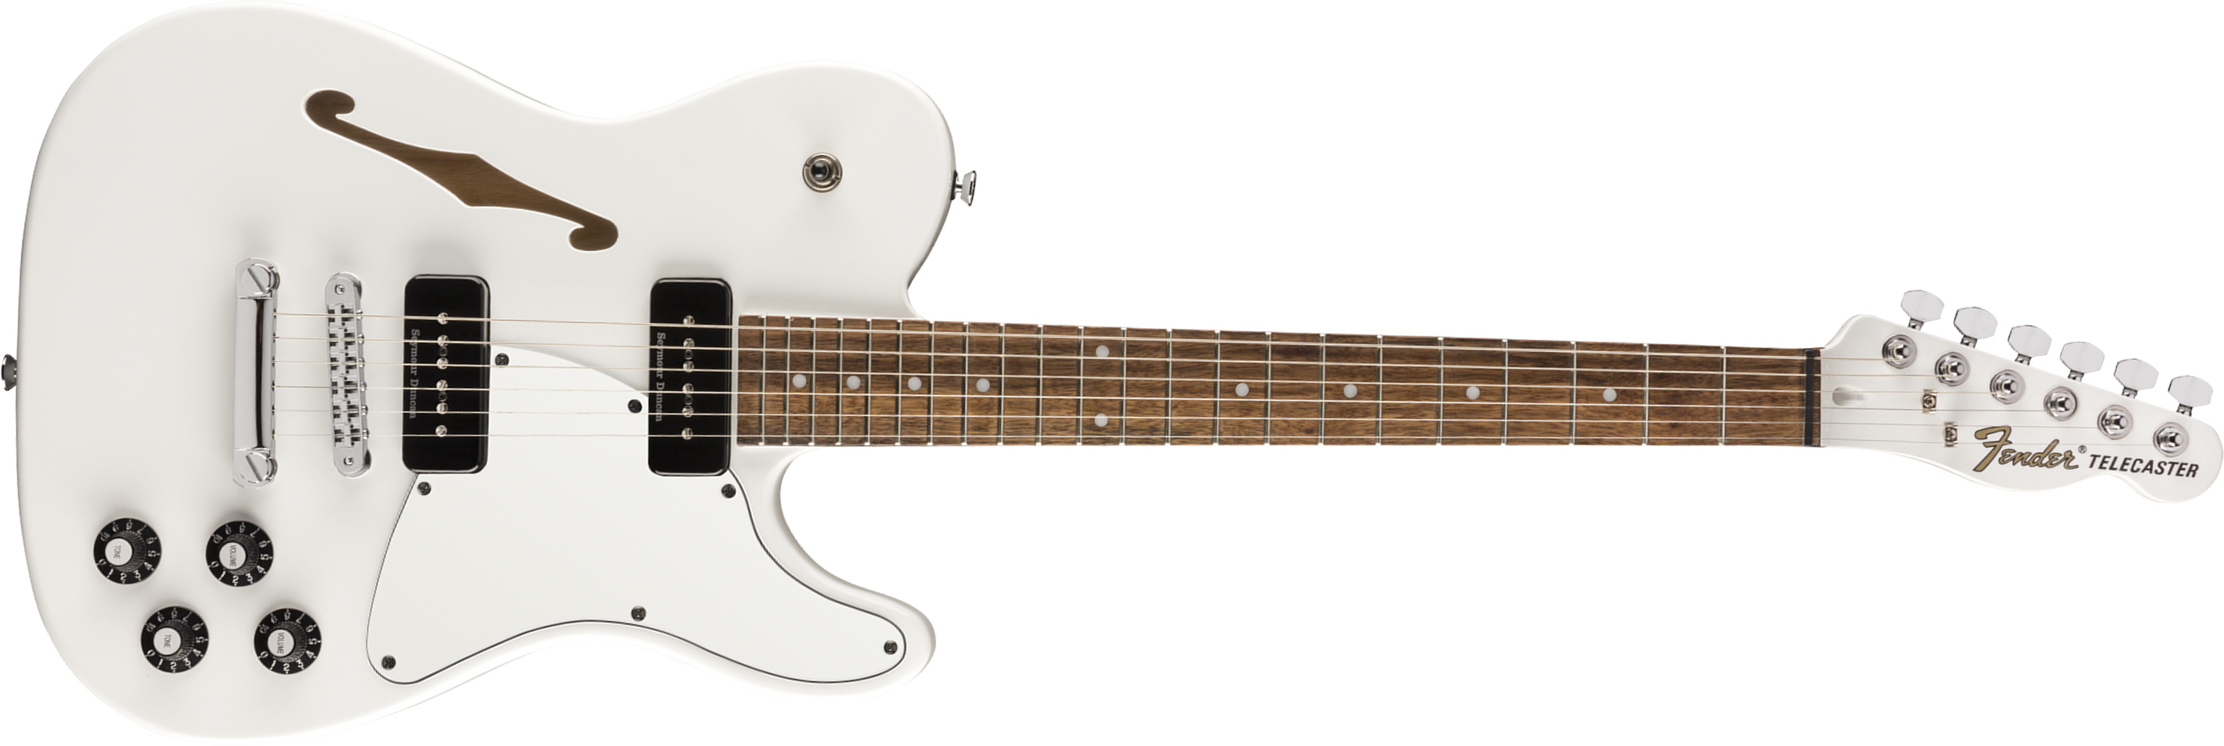 Fender Jim Adkins Tele Ja-90 Mex Signature 2p90 Lau - White - E-Gitarre in Teleform - Main picture